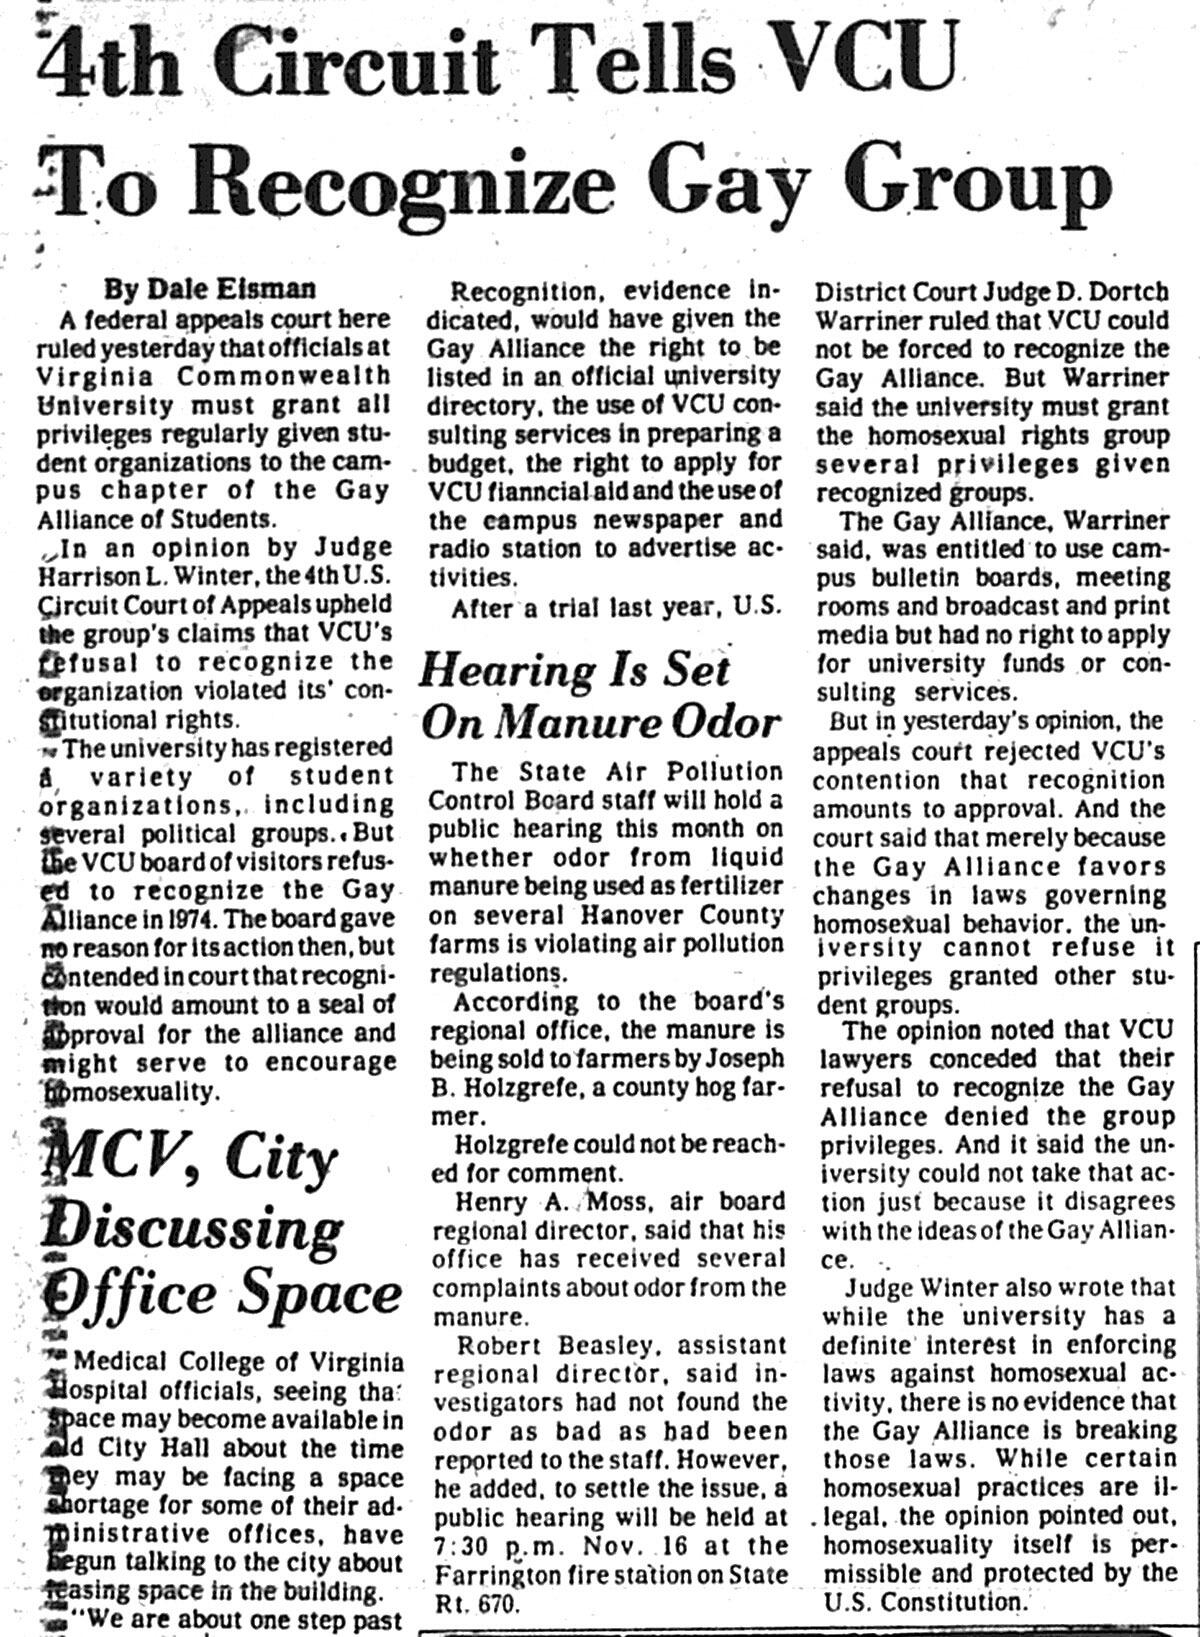 “4th Circuit Tells VCU to Recognize Gay Group”
<br>Richmond Times-Dispatch, Nov. 2, 1976